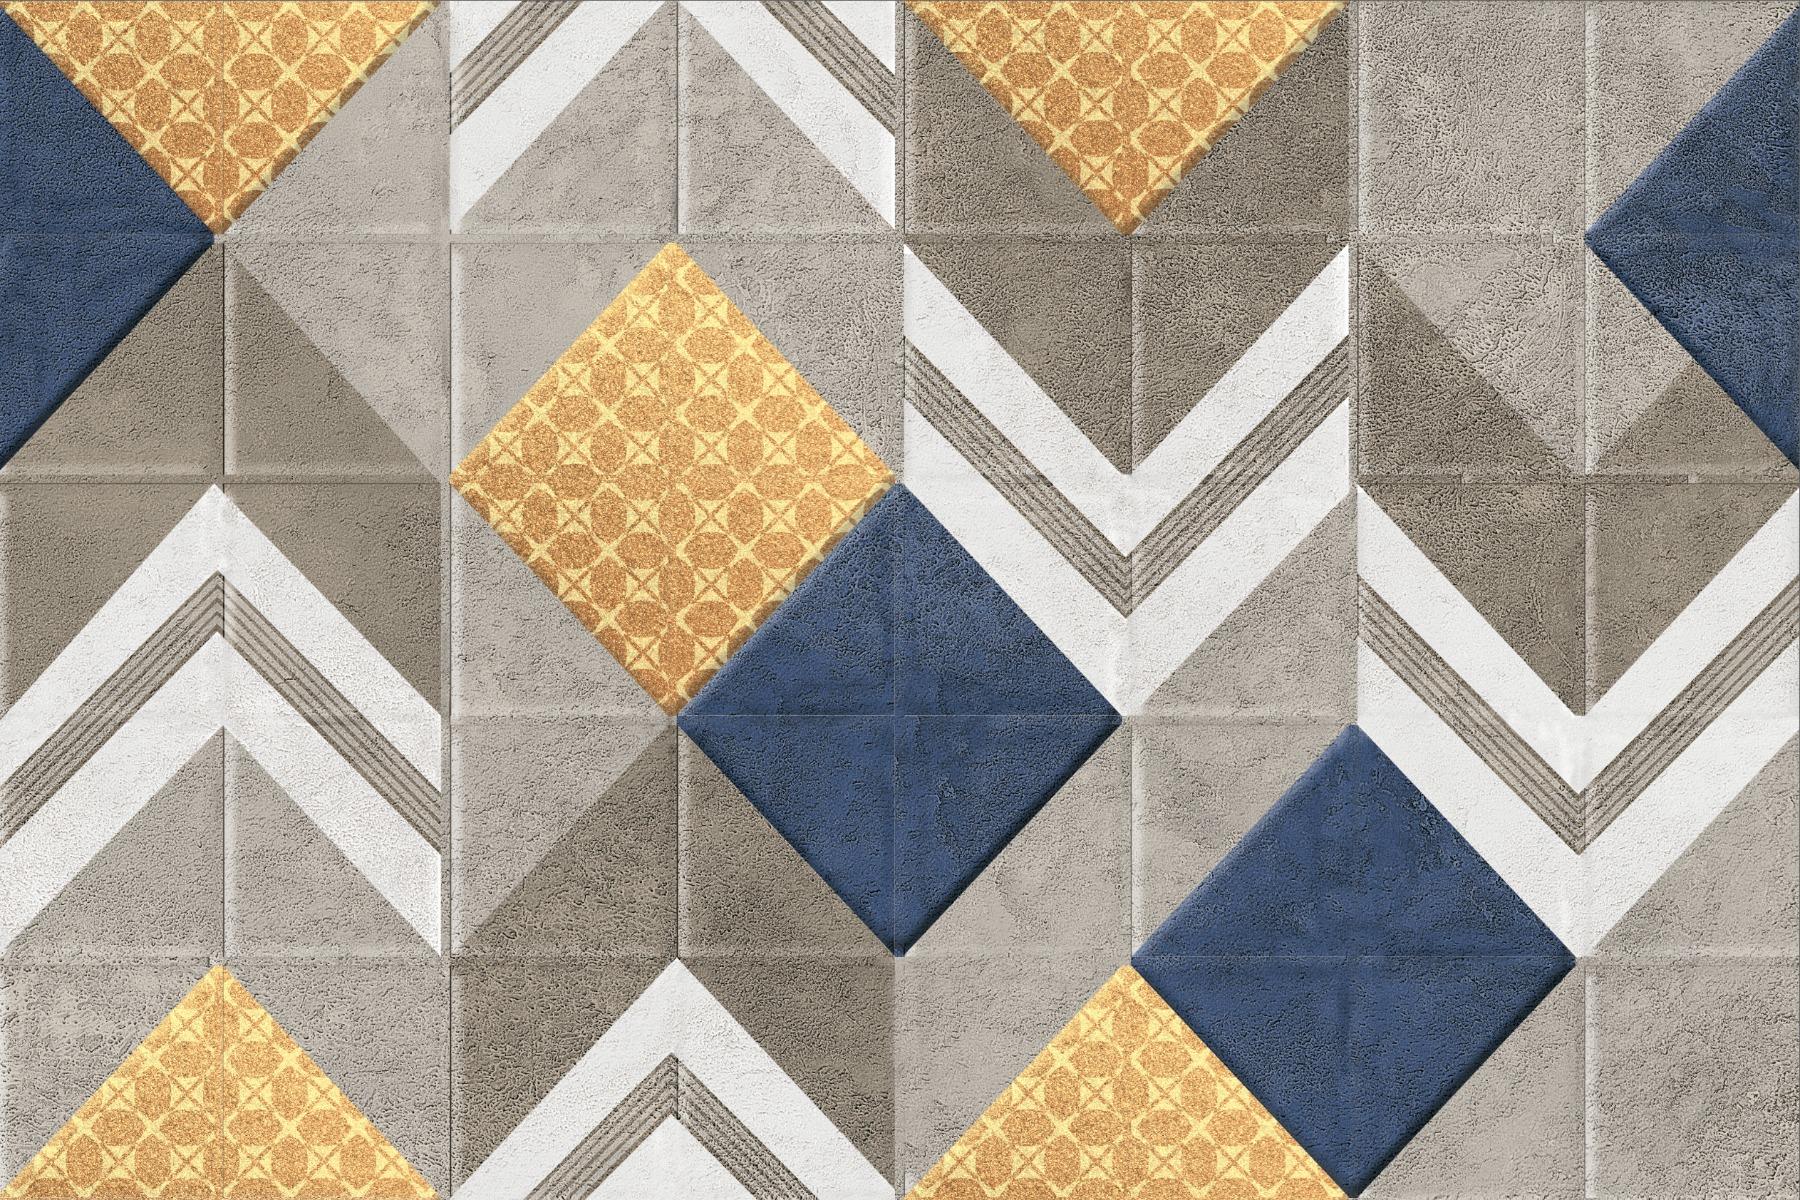 Beige Tiles for Bathroom Tiles, Kitchen Tiles, Accent Tiles, Dining Room Tiles